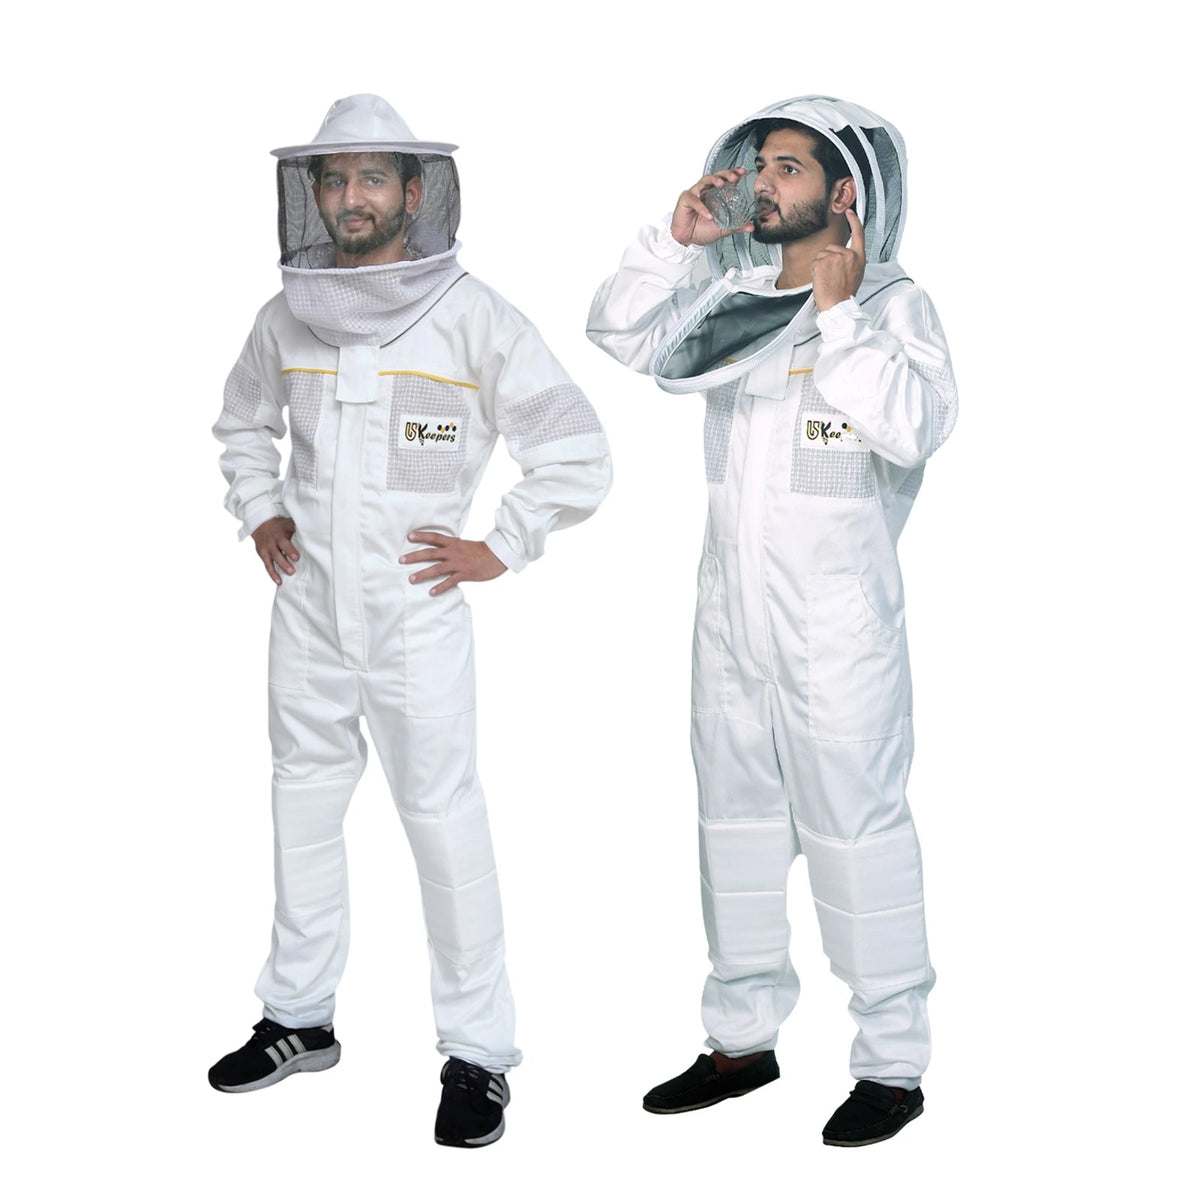 Premium Beekeeper Suits Semi Ventilated Bee keeper Protective Gear